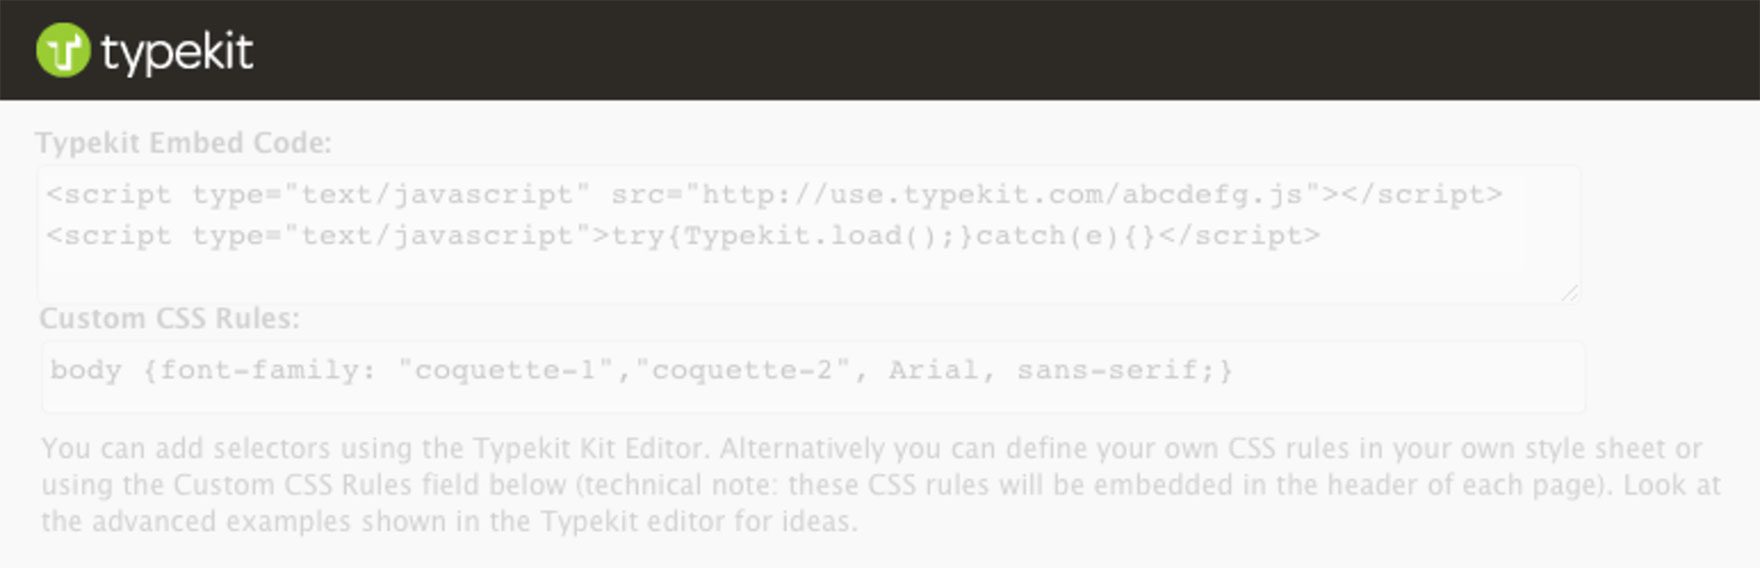 Typekit Fonts for WordPress